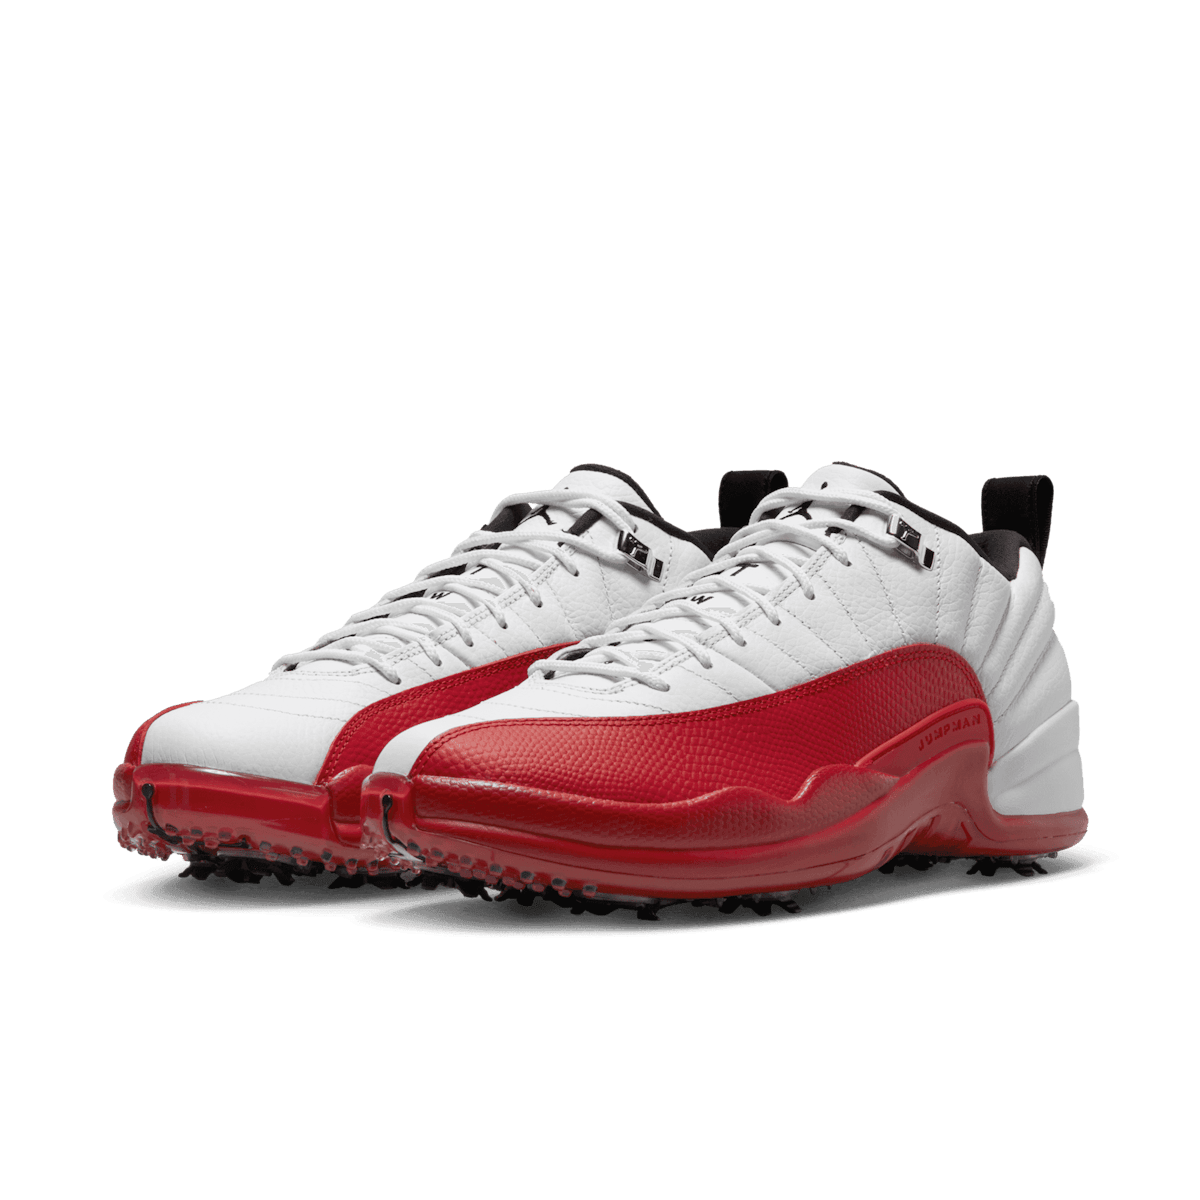 Air Jordan 12 Retro Low Golf Cherry Angle 2